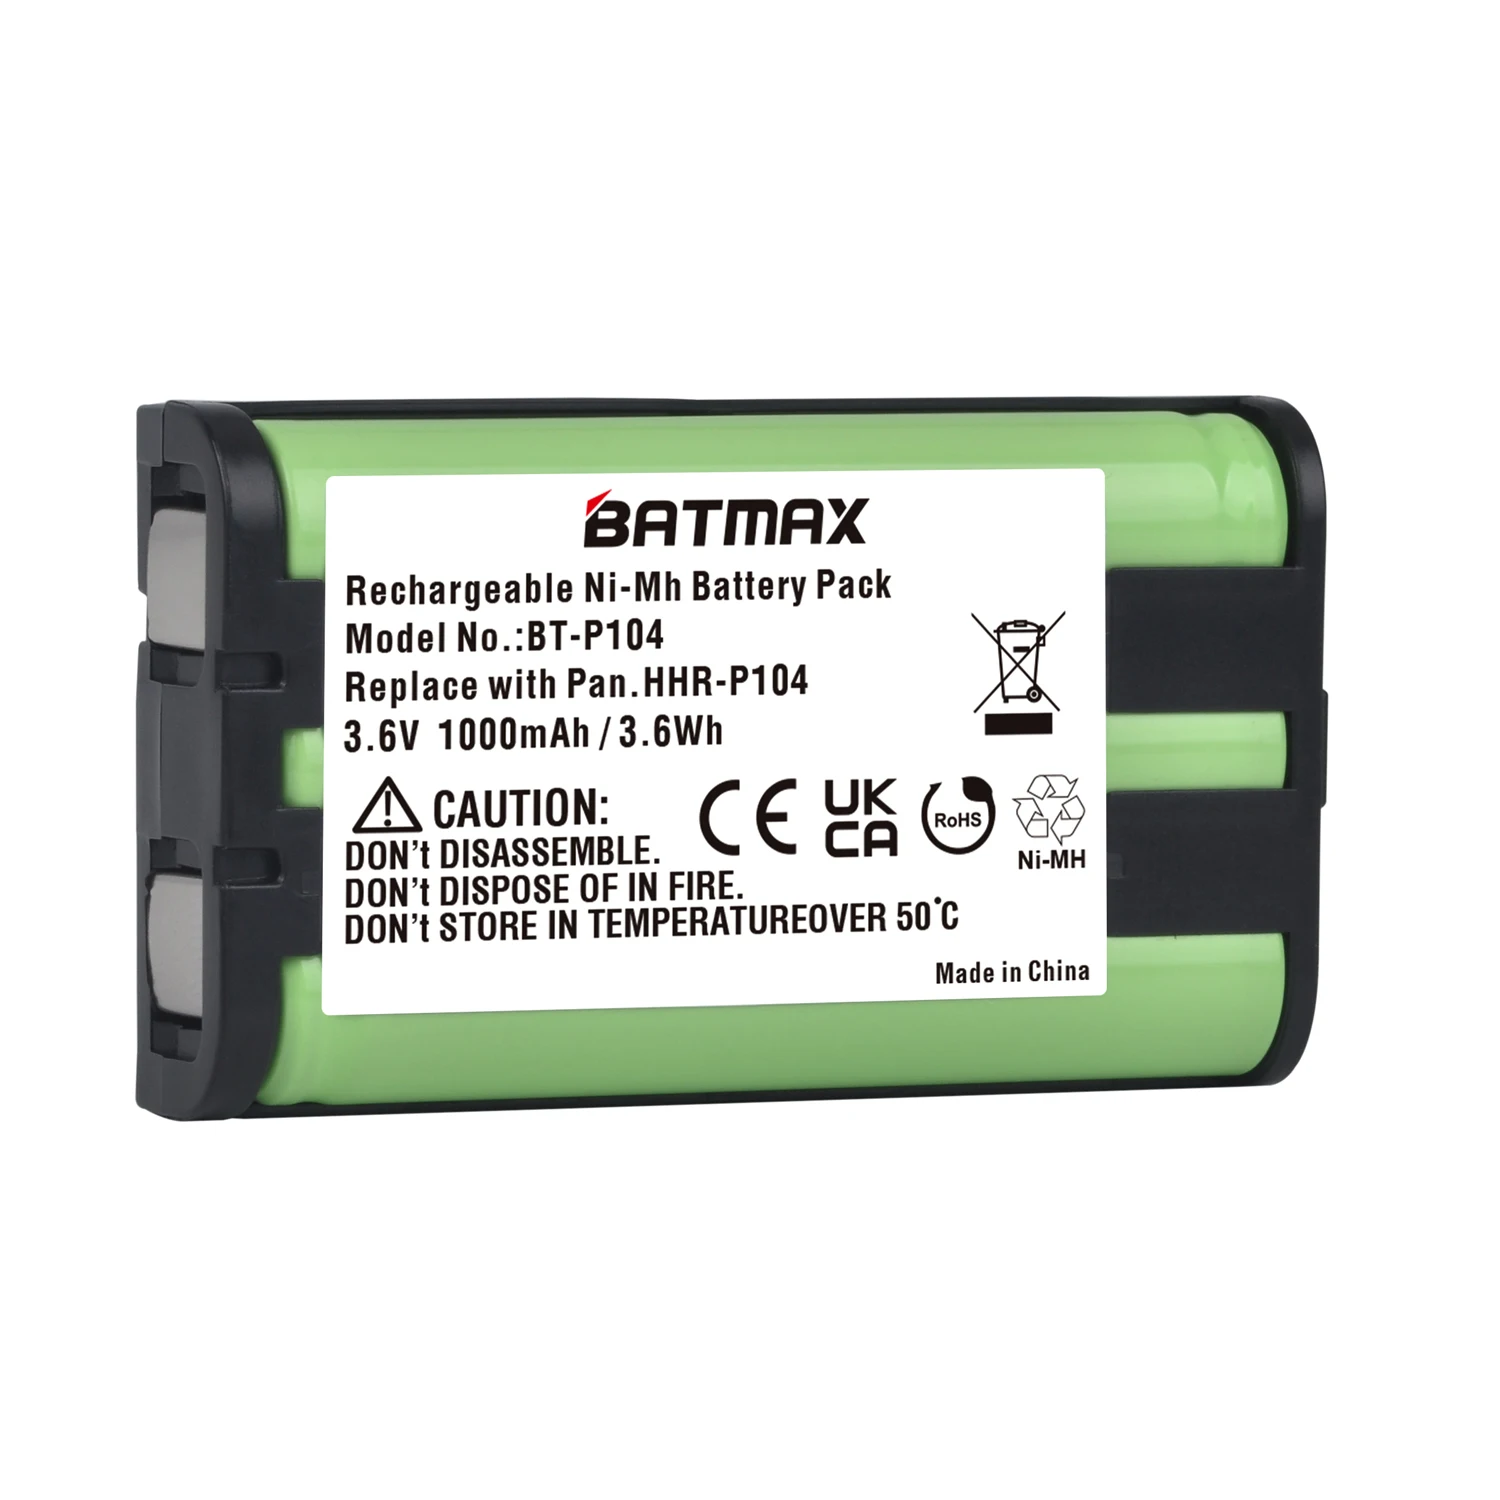 

Batmax 3.6V 1000mAh Type 29 Phone Battery for Panasonic HHR-P104,HHR-P104A,KX-TGA520M,KX-FG6550,KX-FPG391,KX-TG2388B,KX-TG2396